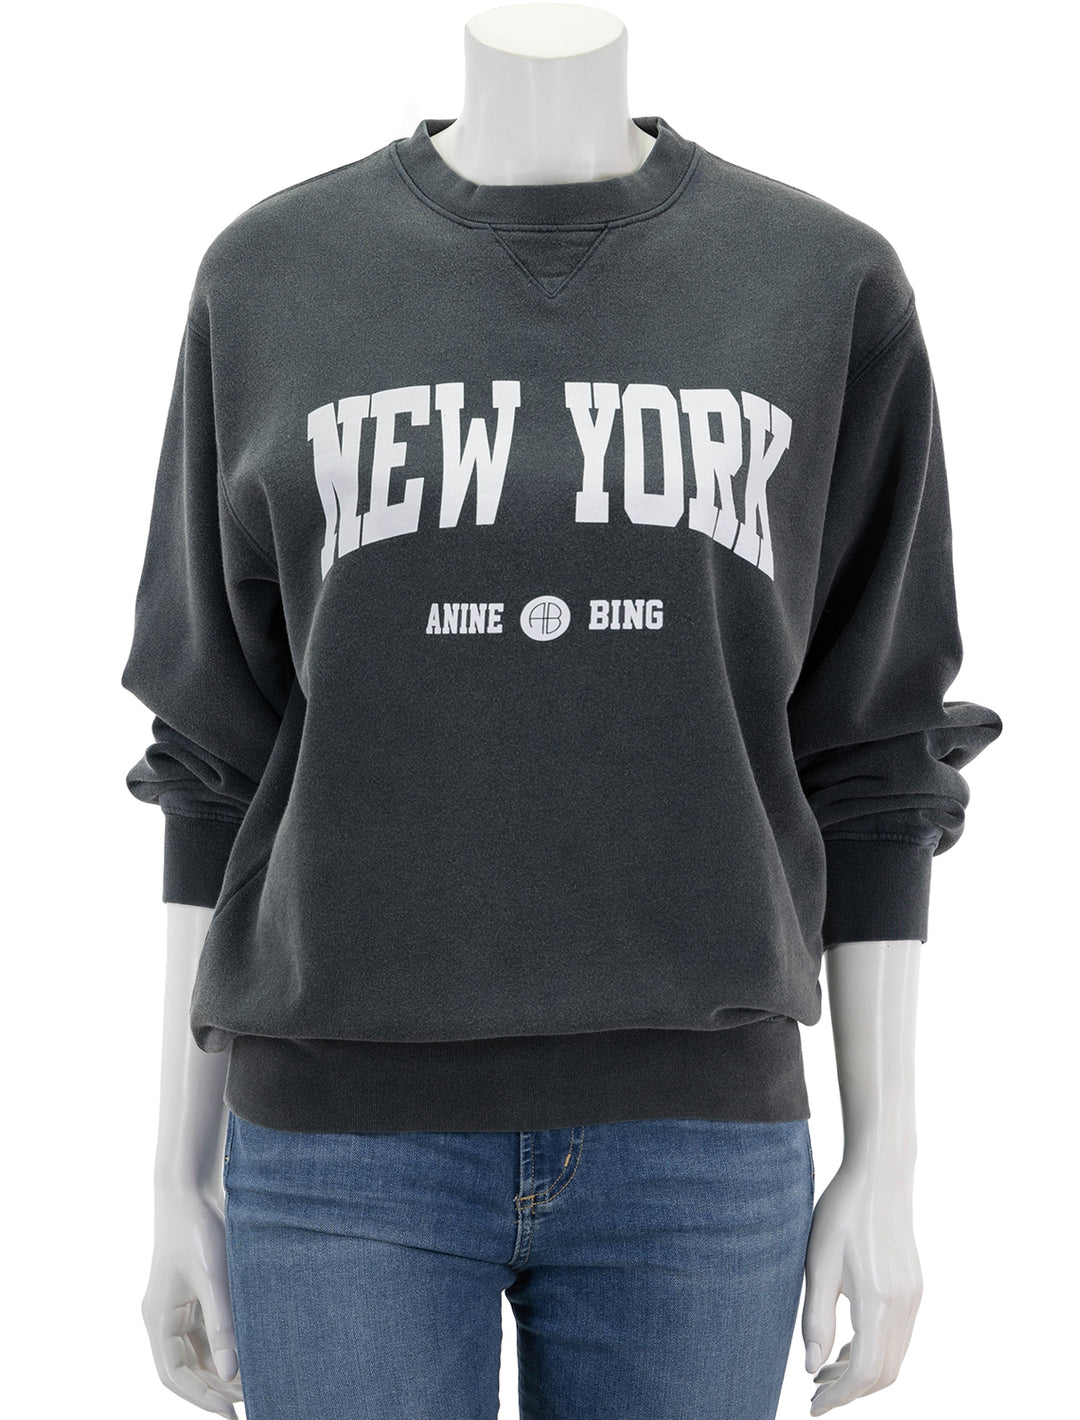 Front view of Anine Bing's new york ramona sweatshirt in washed black.